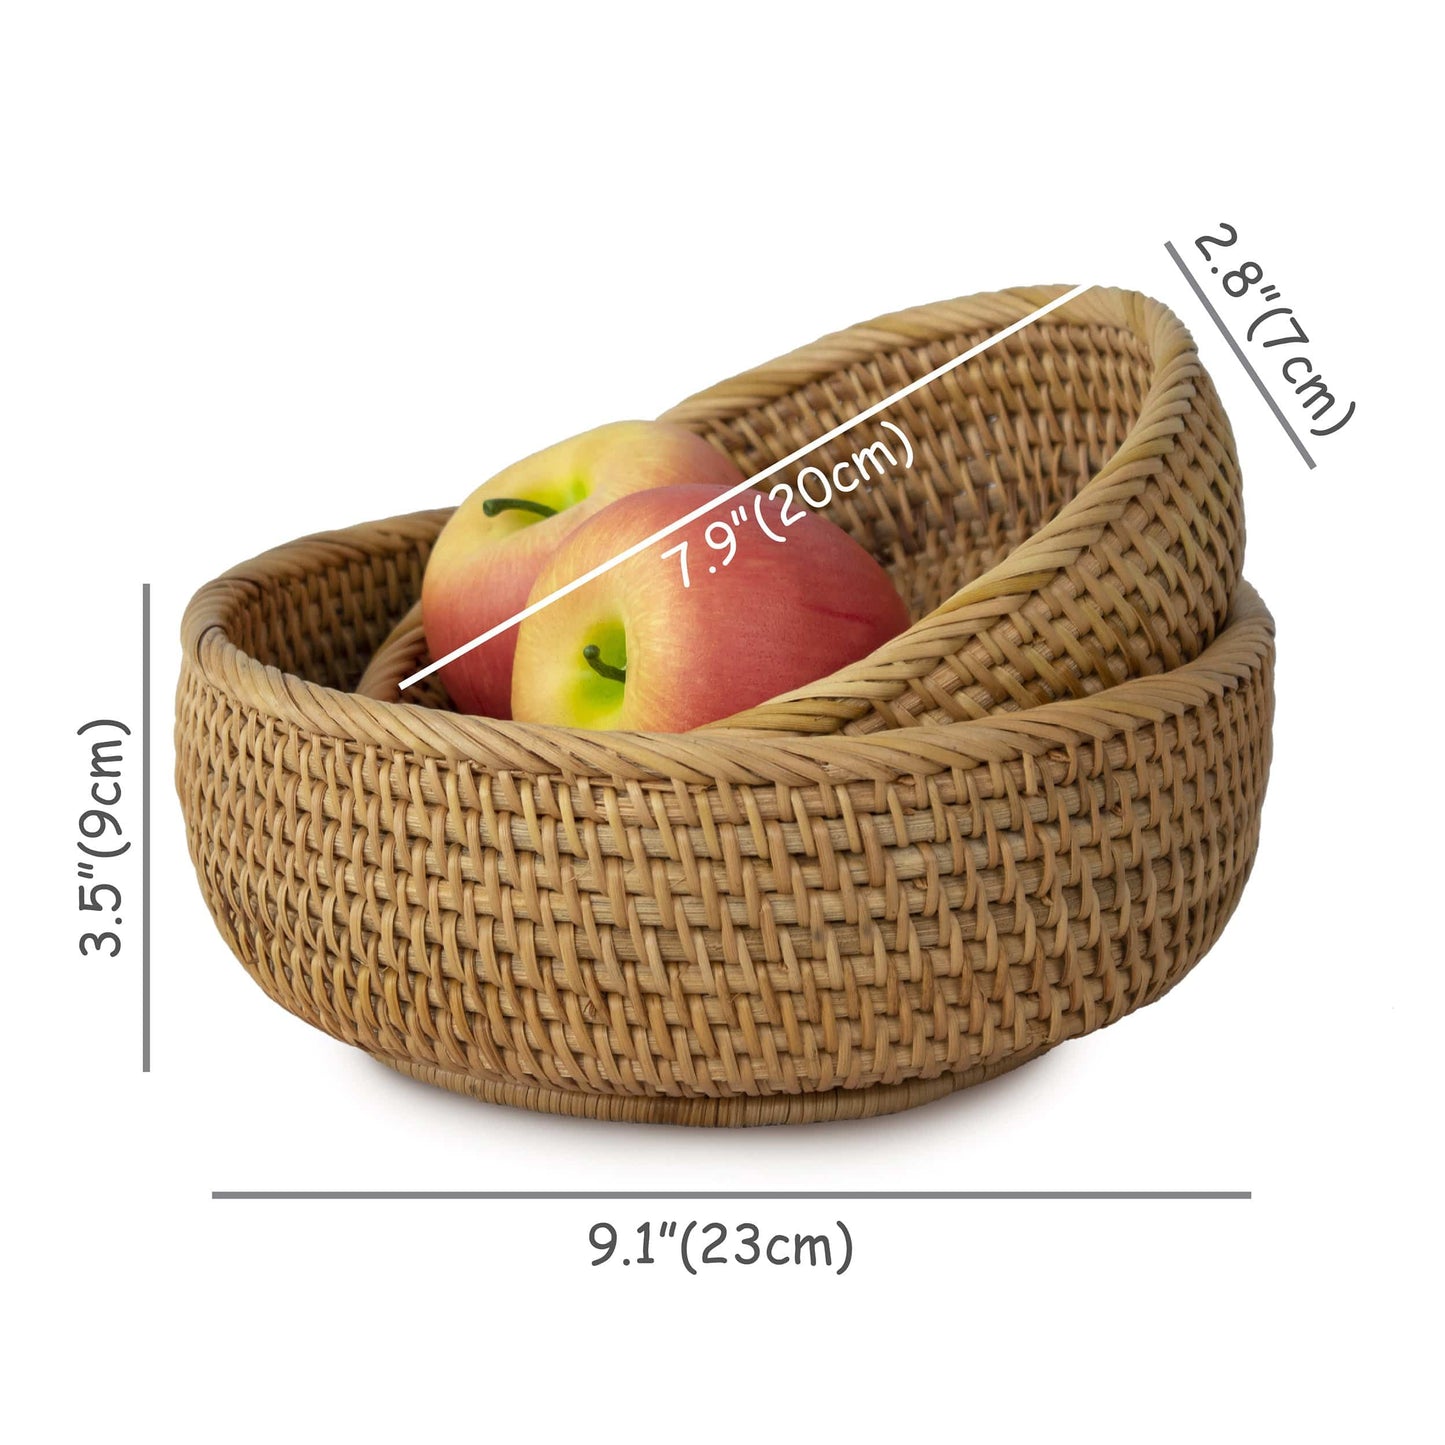 Bowl Shaped Wicker Basket Set | Tabletop Serving Bowls for Home and Restaurant